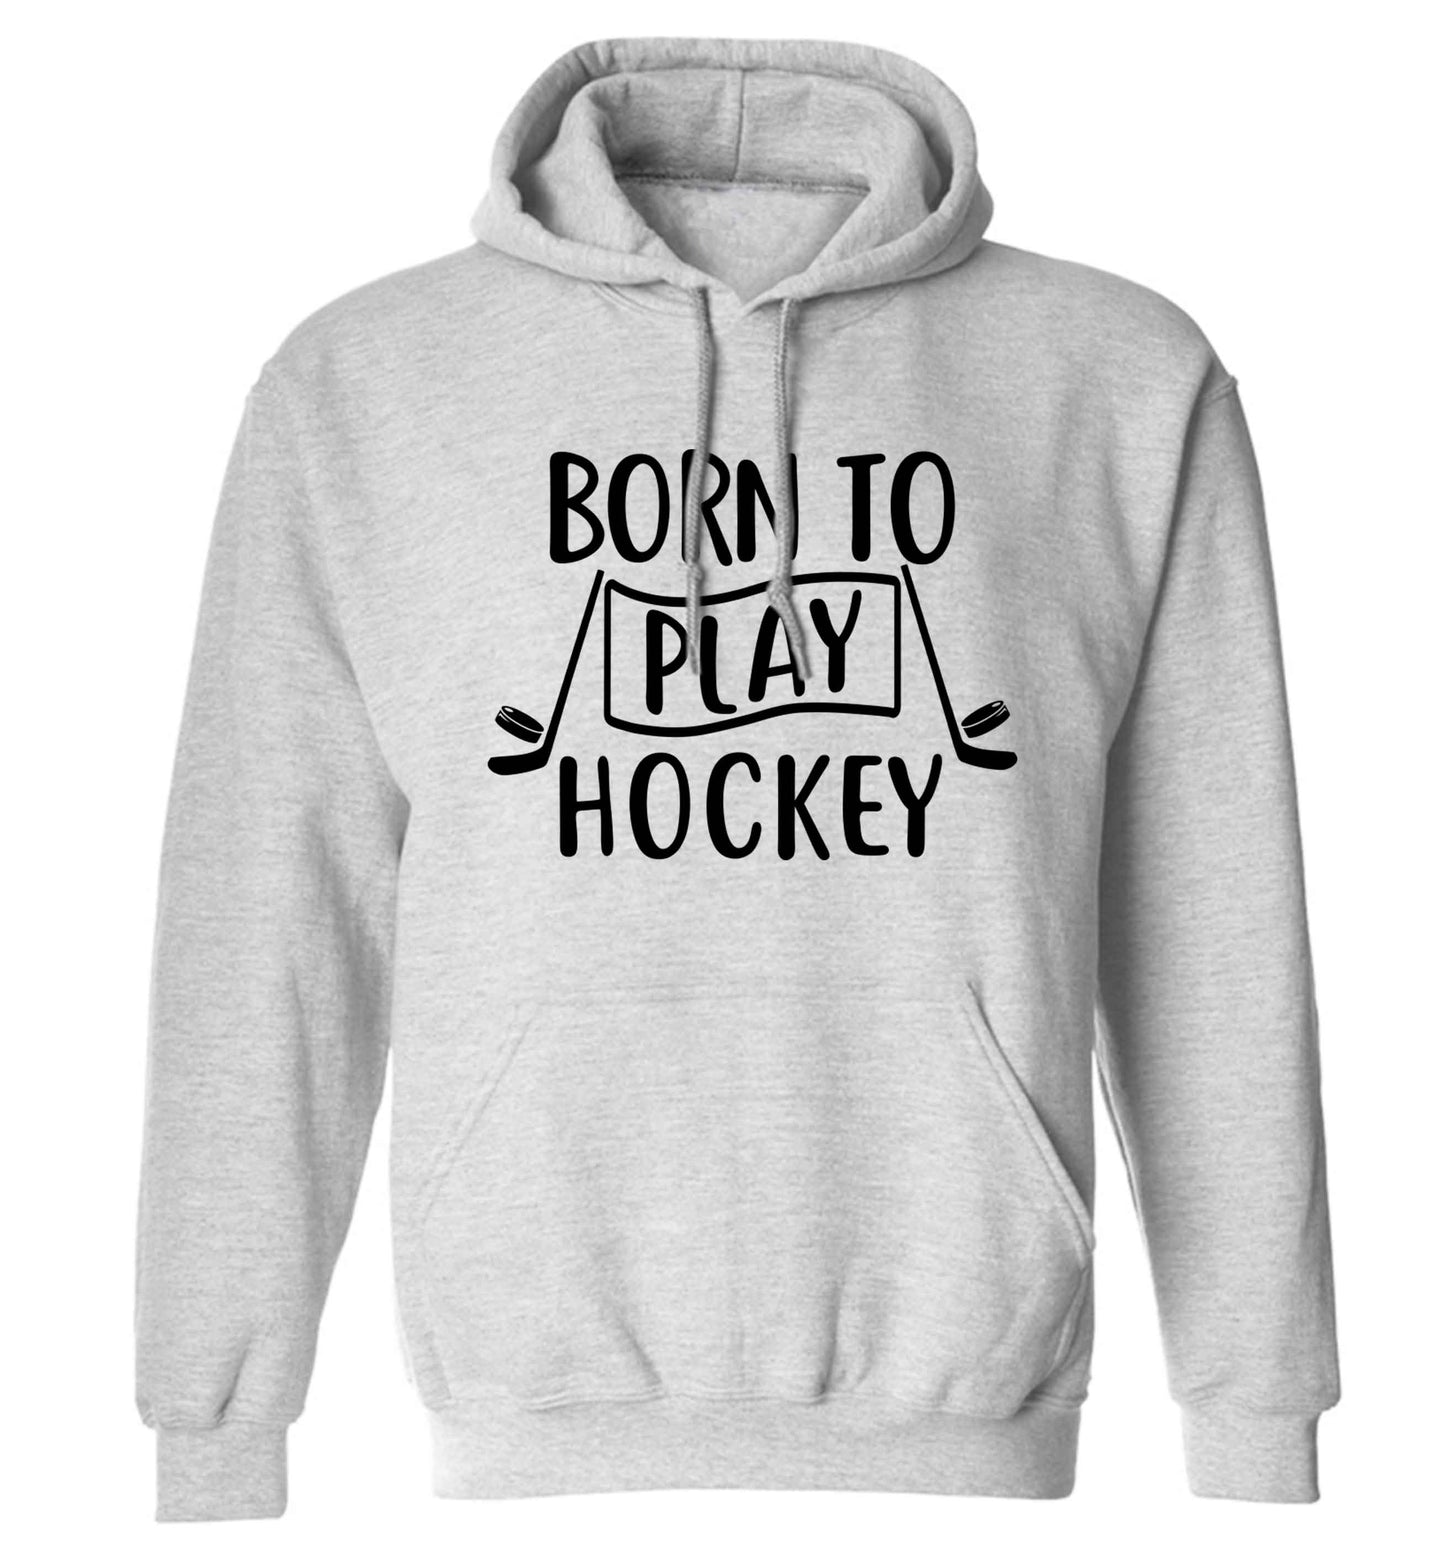 Born to play hockey adults unisex grey hoodie 2XL